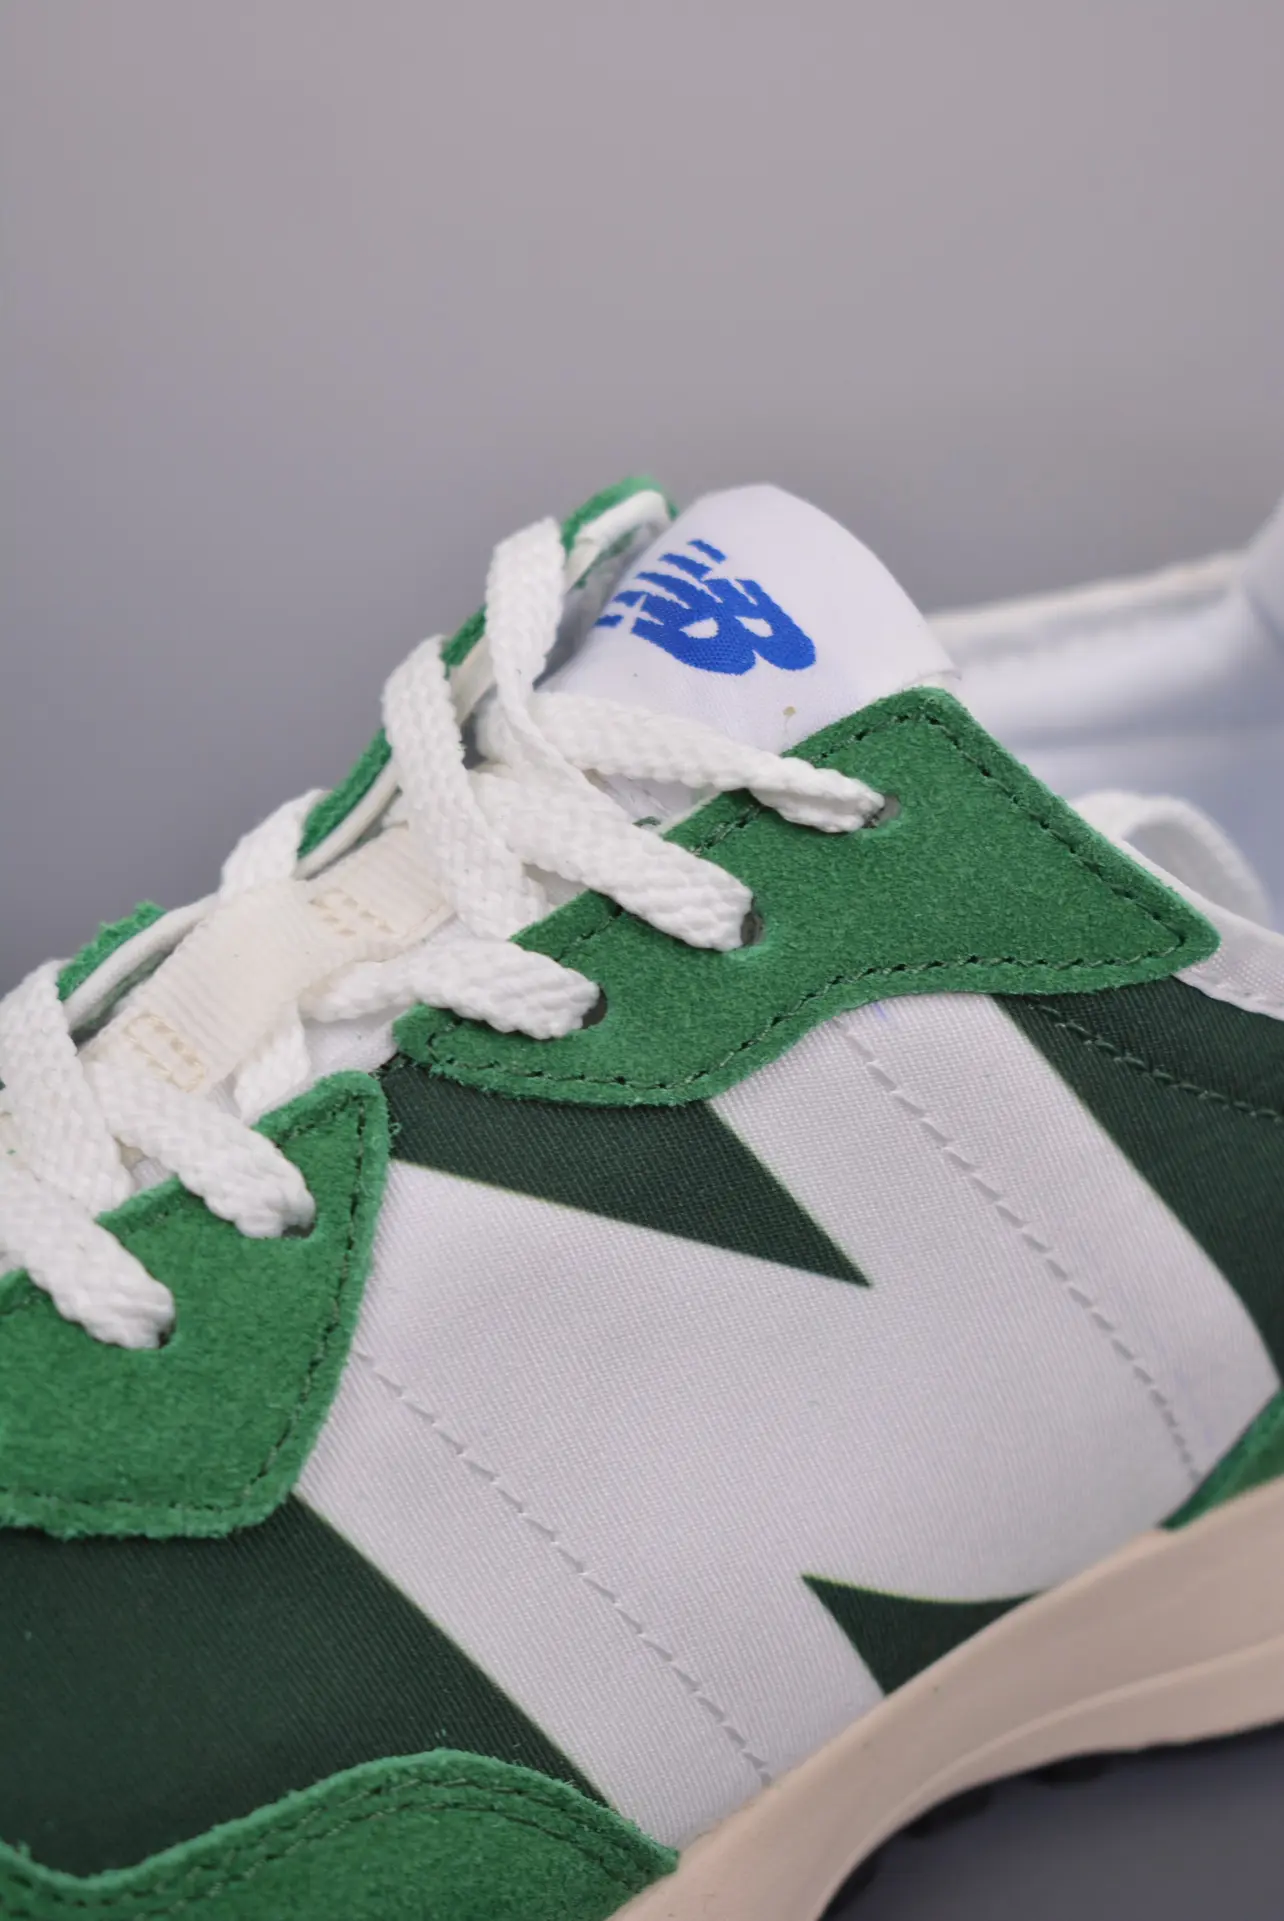 New Balance 327 'Varsity Green' MS327LG1 Shoes Review | YtaYta